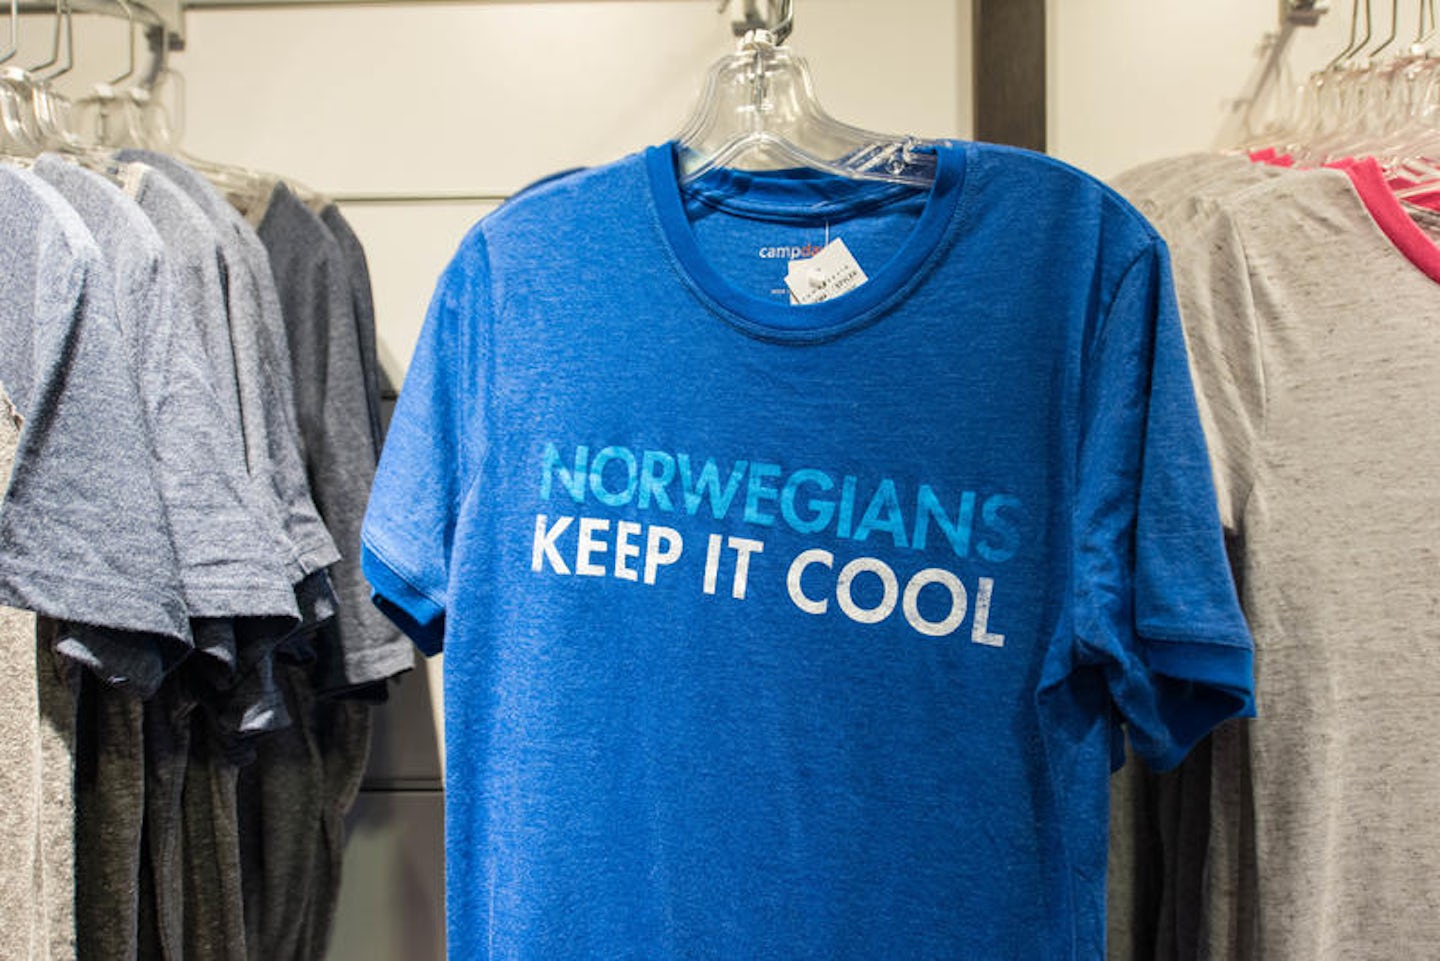 Tides Boutique on Norwegian Breakaway (Photo: Cruise Critic)